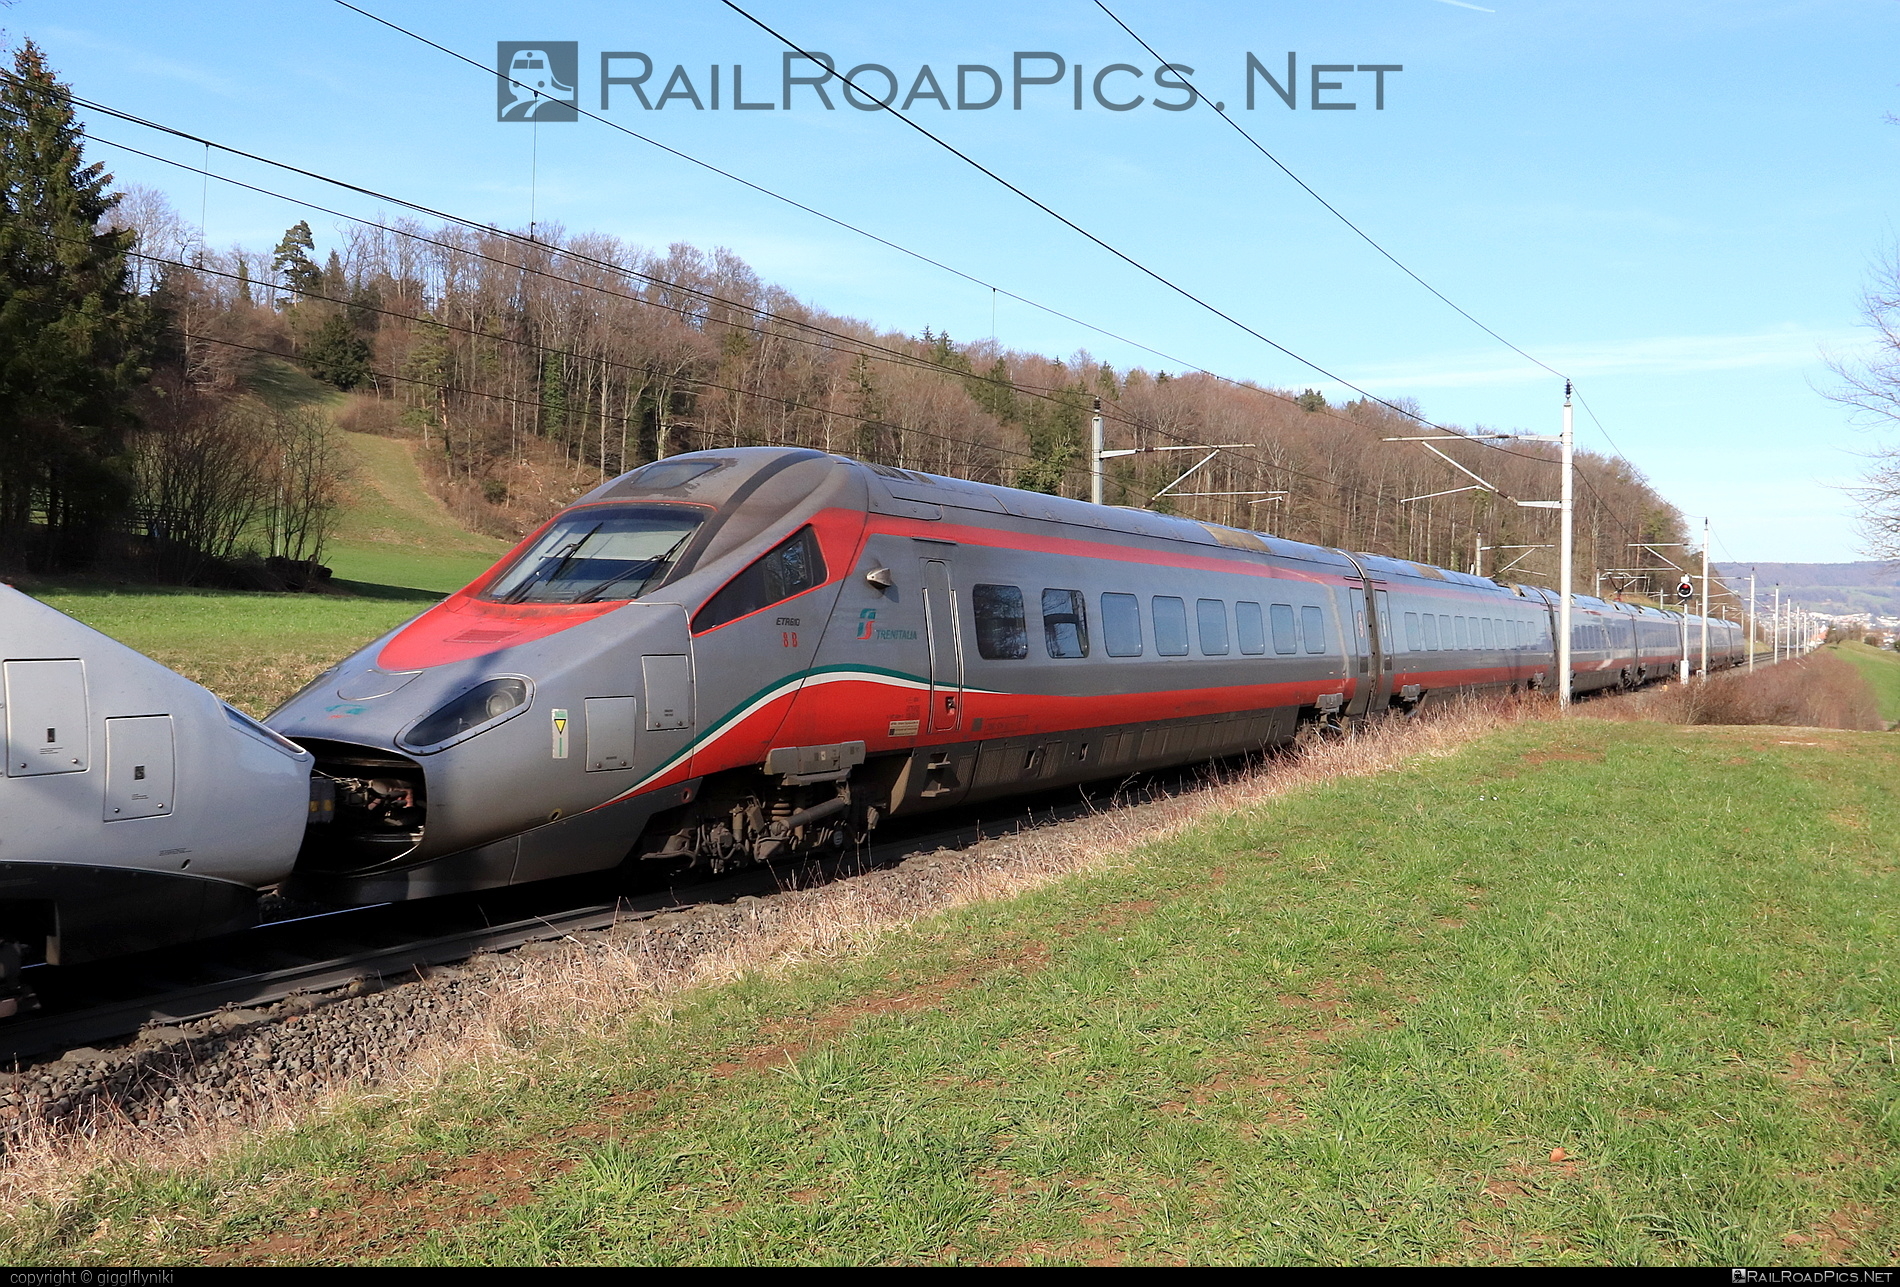 Alstom Class ETR.600 - ETR 610.08 operated by Trenitalia S.p.A. #alstom #alstometr600 #etr600 #ferroviedellostato #fs #fsitaliane #newpendolino #pendolino #trenitalia #trenitaliaspa